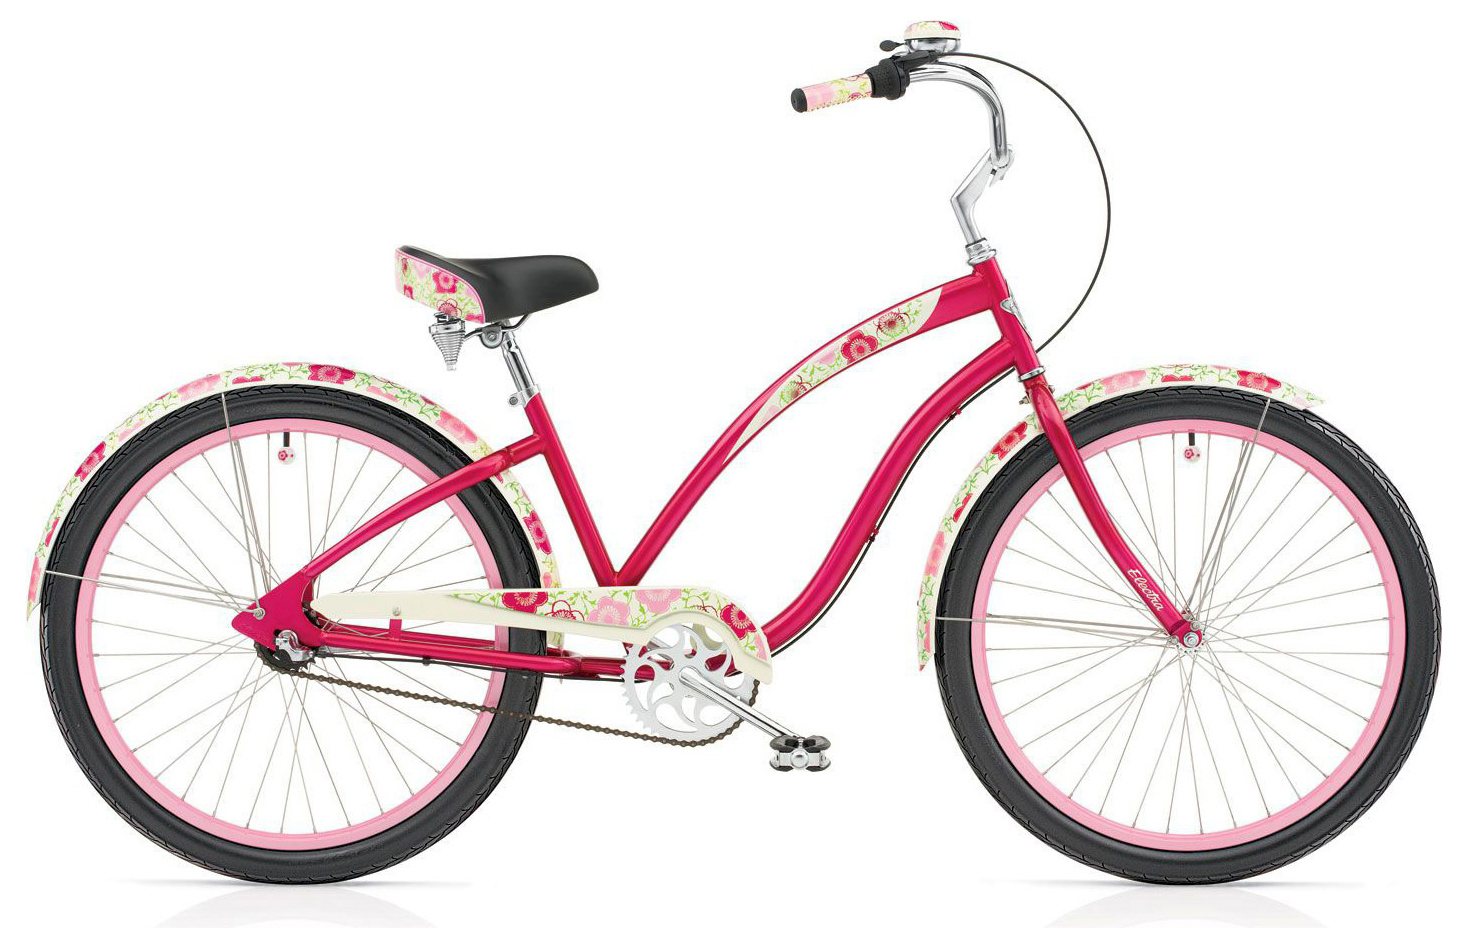  Велосипед Electra Flowers 3i 2019